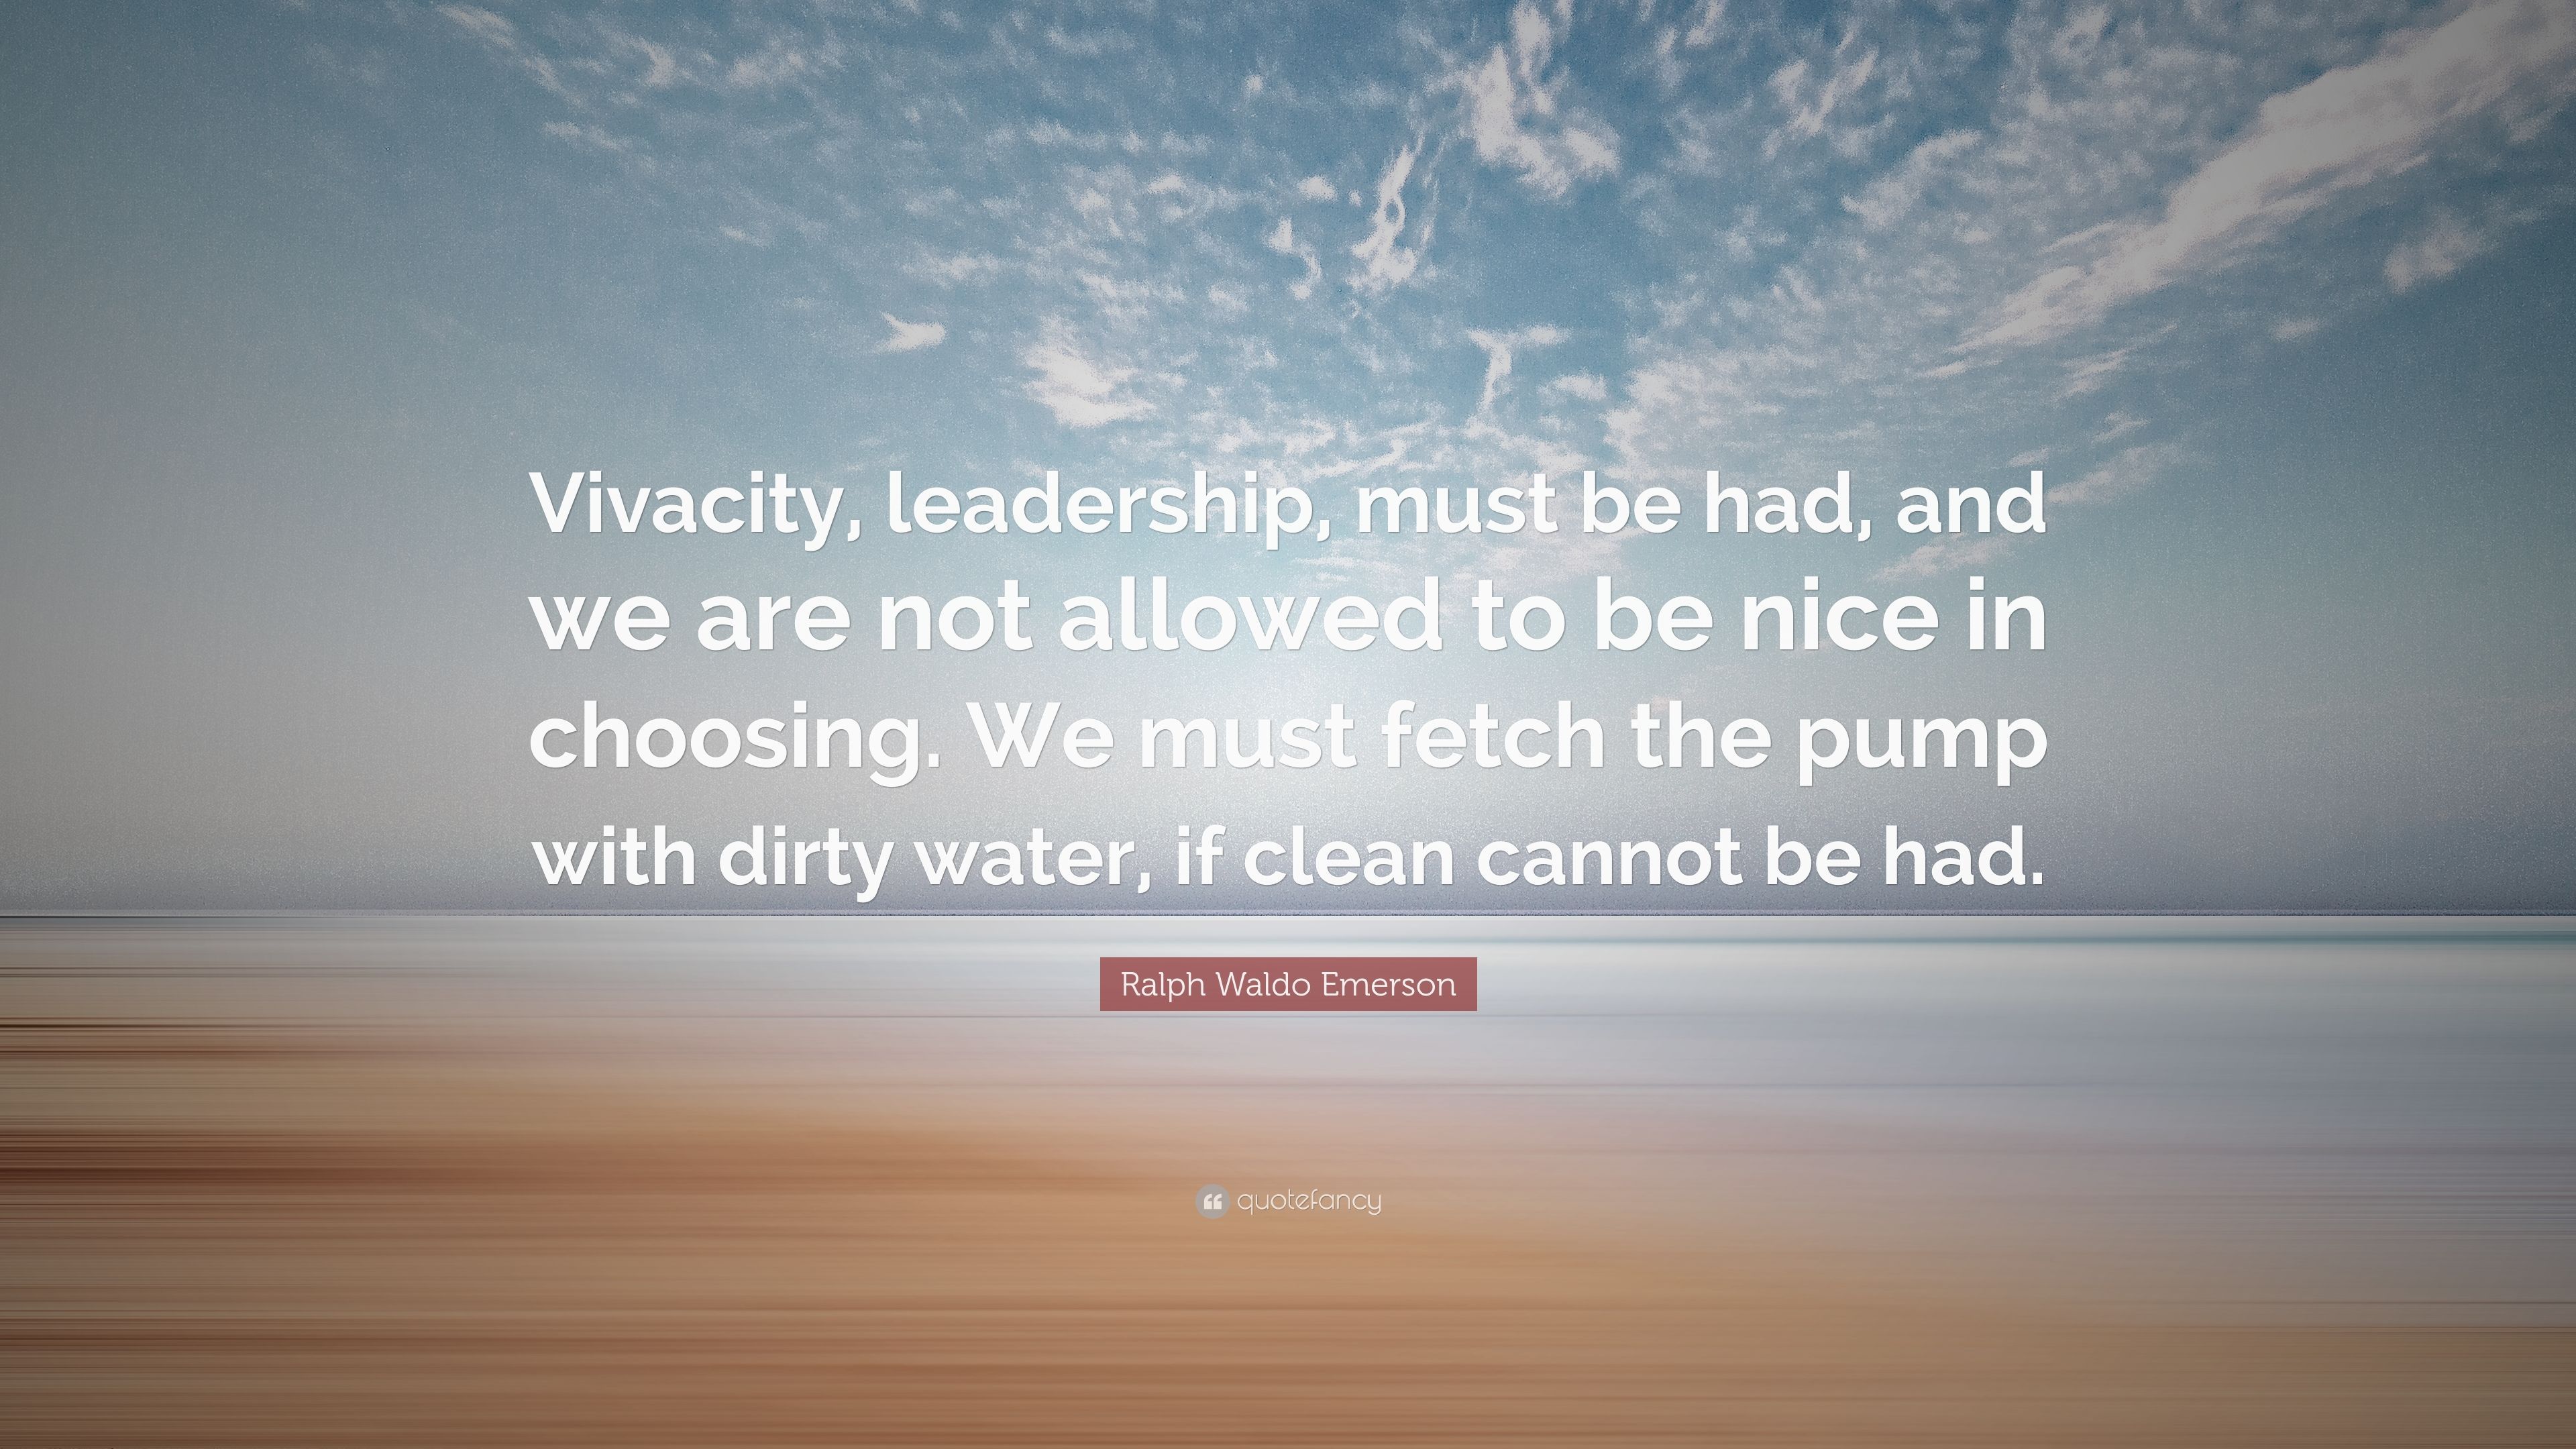 Ralph Waldo Emerson Quote: “Vivacity, leadership, must be had